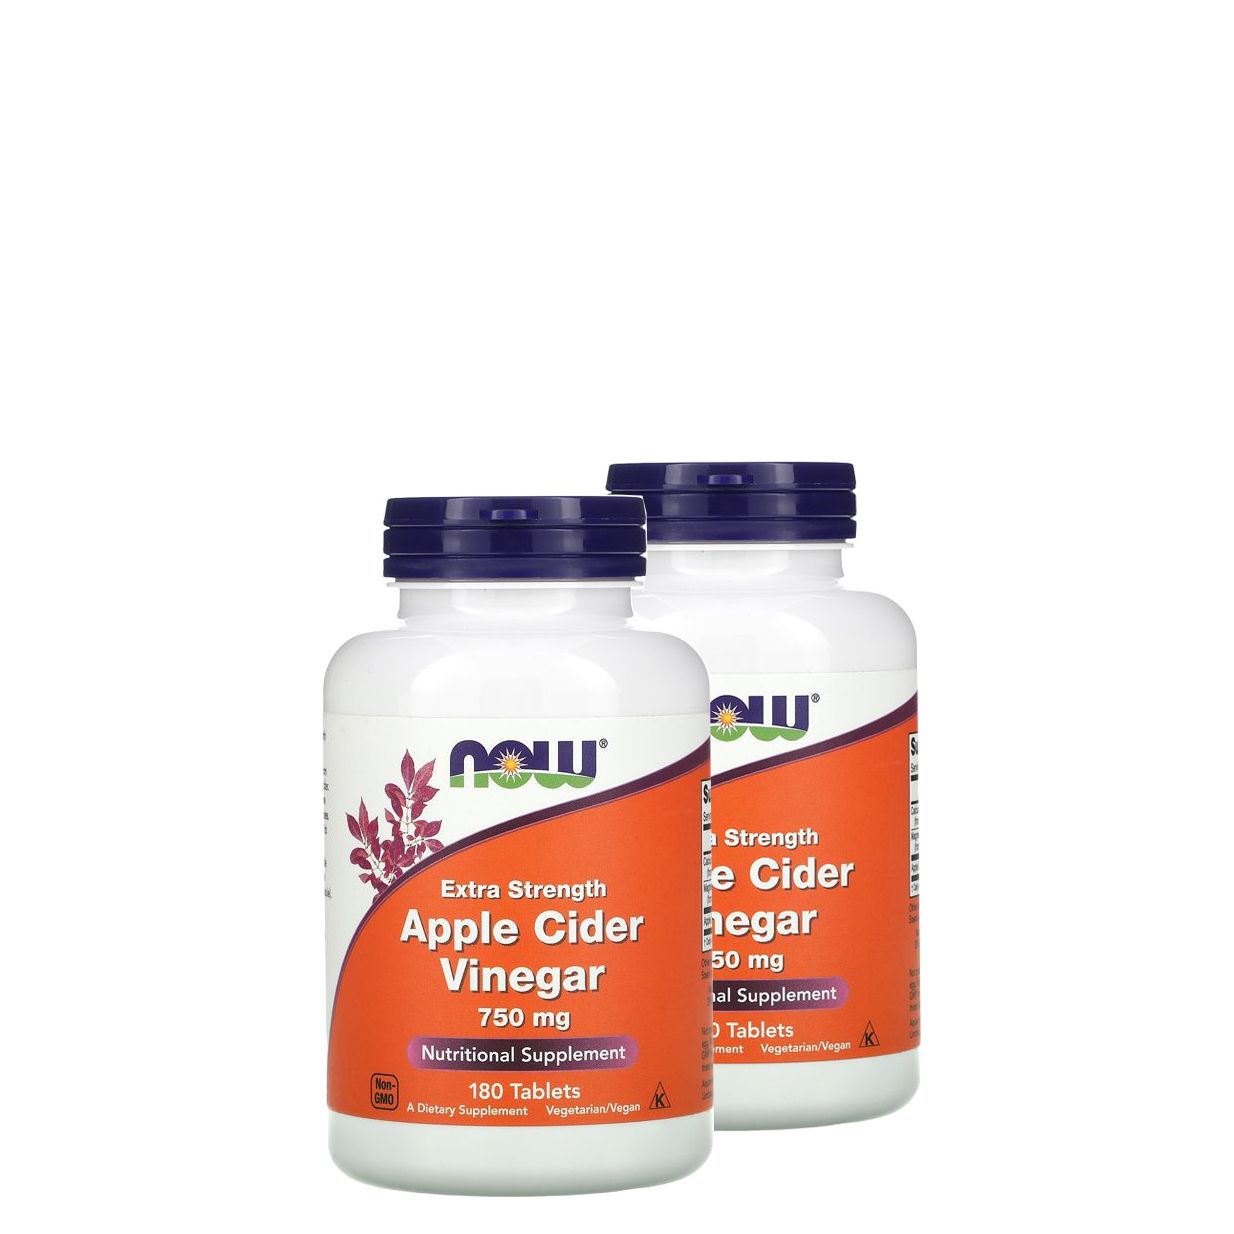 Extra dózisú almaecet 750 mg, Now Extra Strength Apple Cider Vinegar, 2x180 tabletta